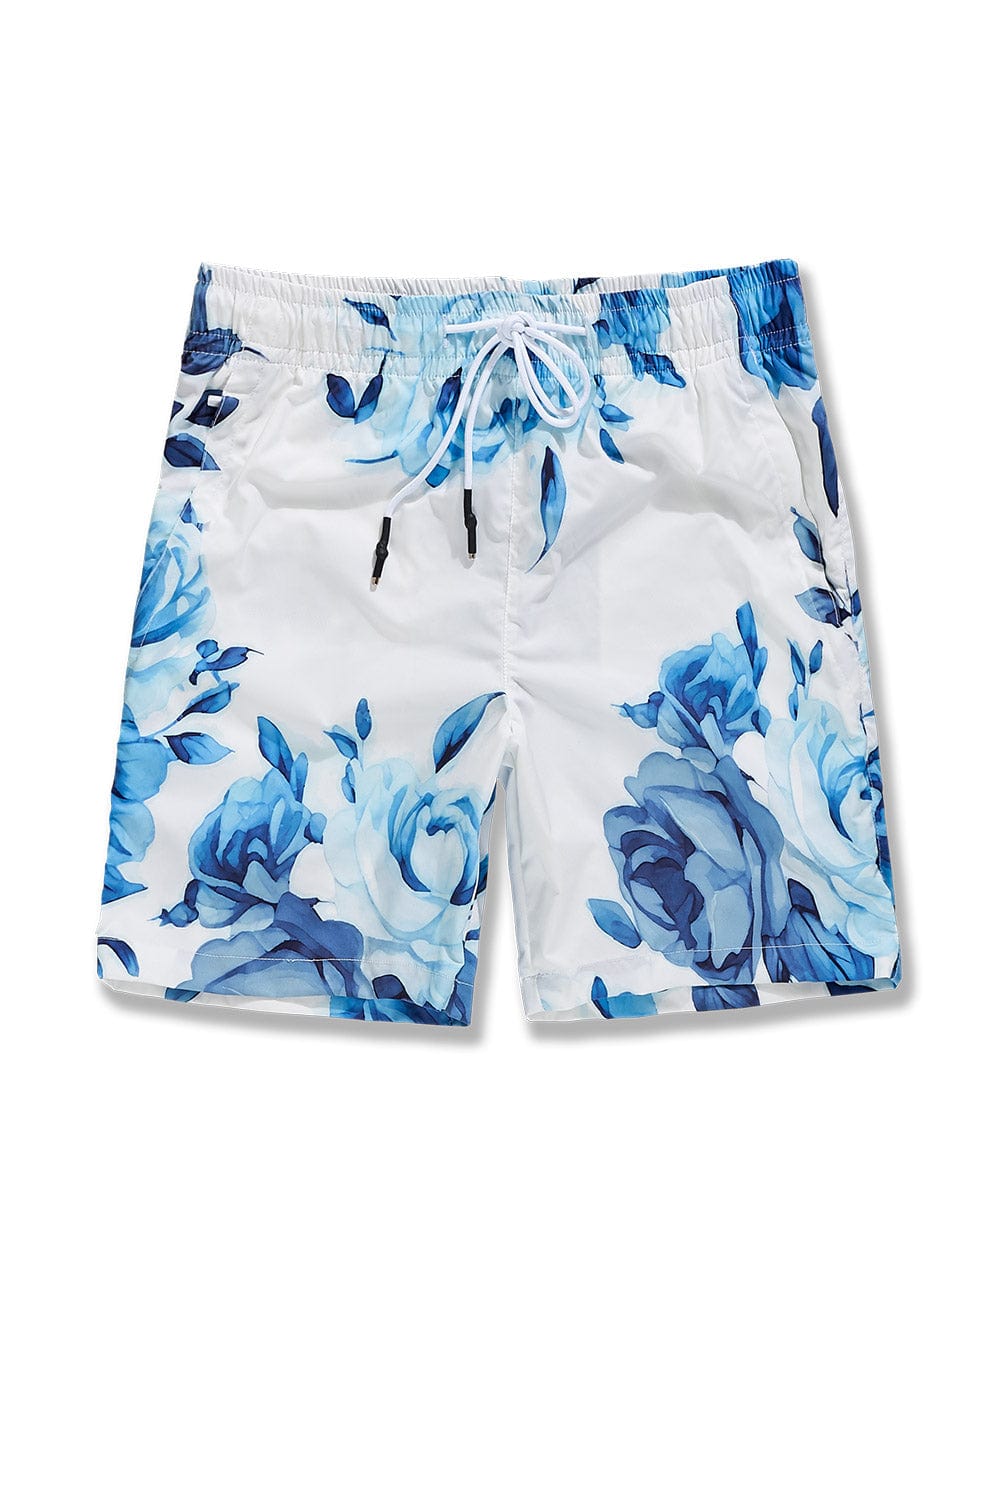 Jordan Craig Retro - Ibiza Lounge Shorts Blue Floral / S